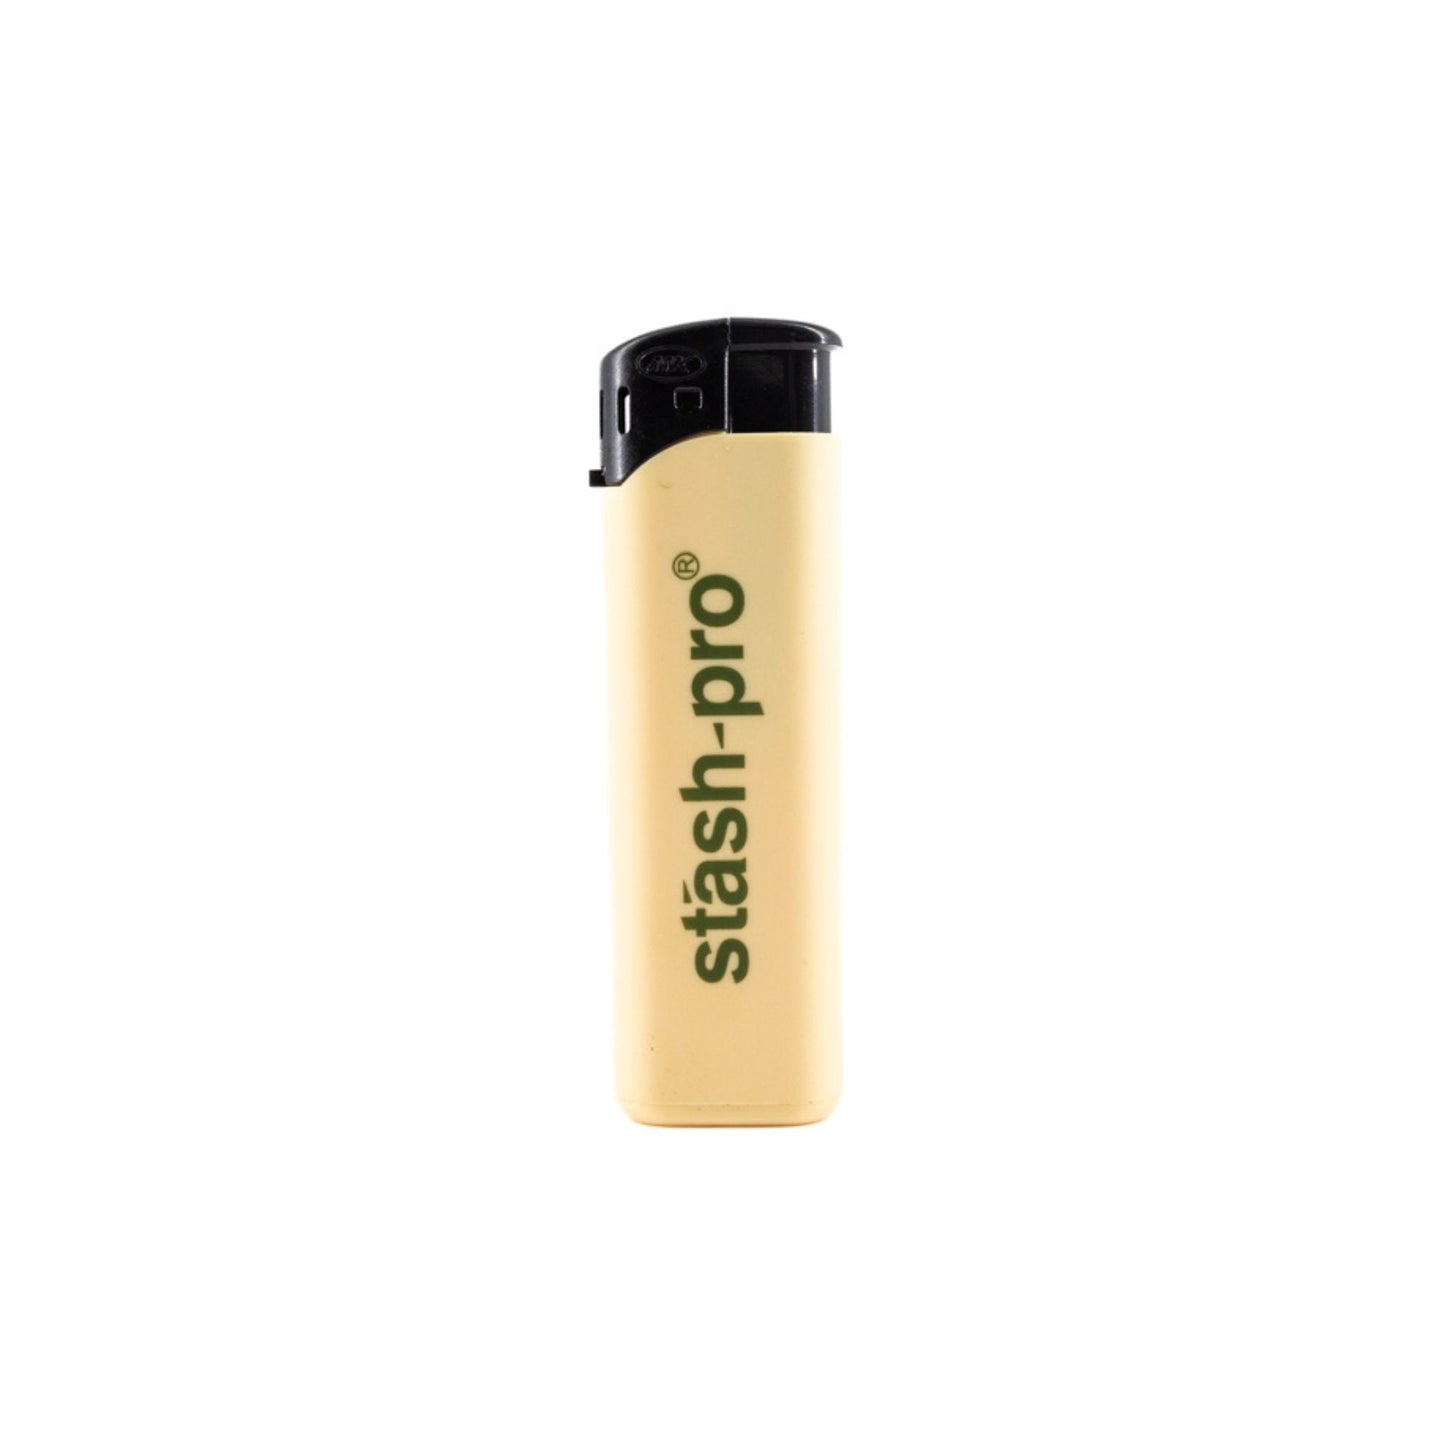 Stash-Pro Pocket Lighter ZY218DKS1 Peach